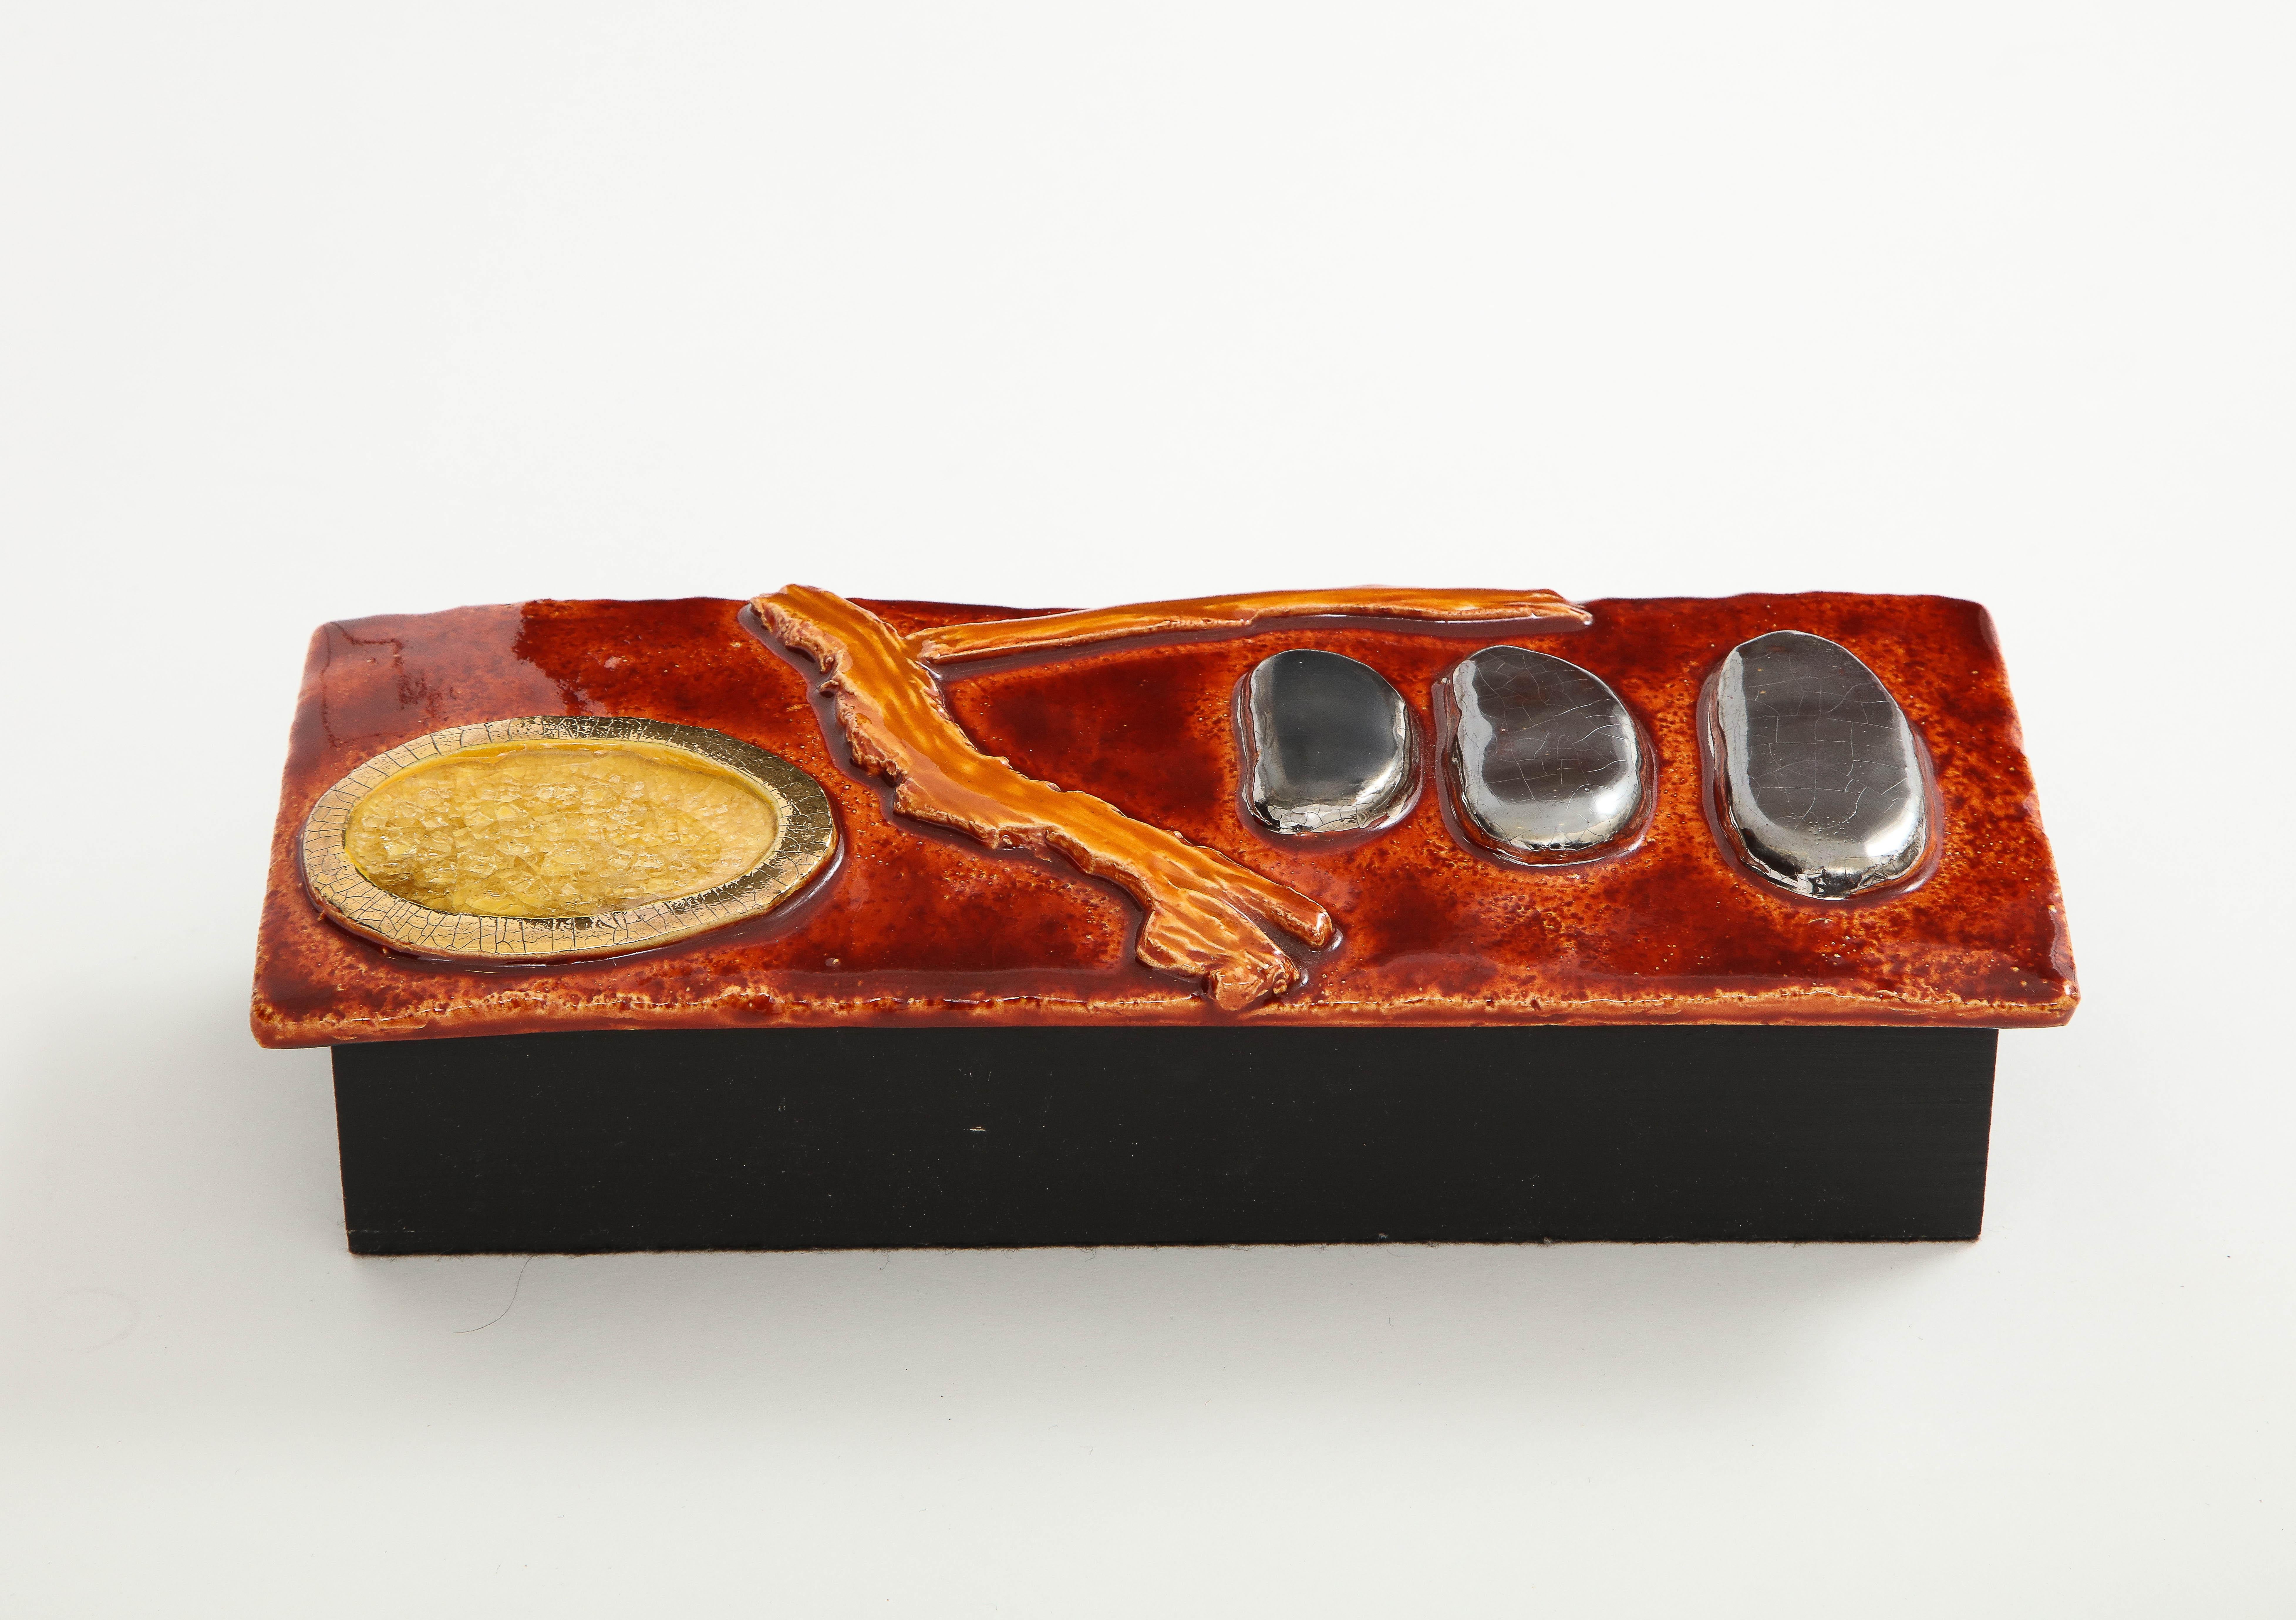 Enameled ceramic lid and black wooden under box.